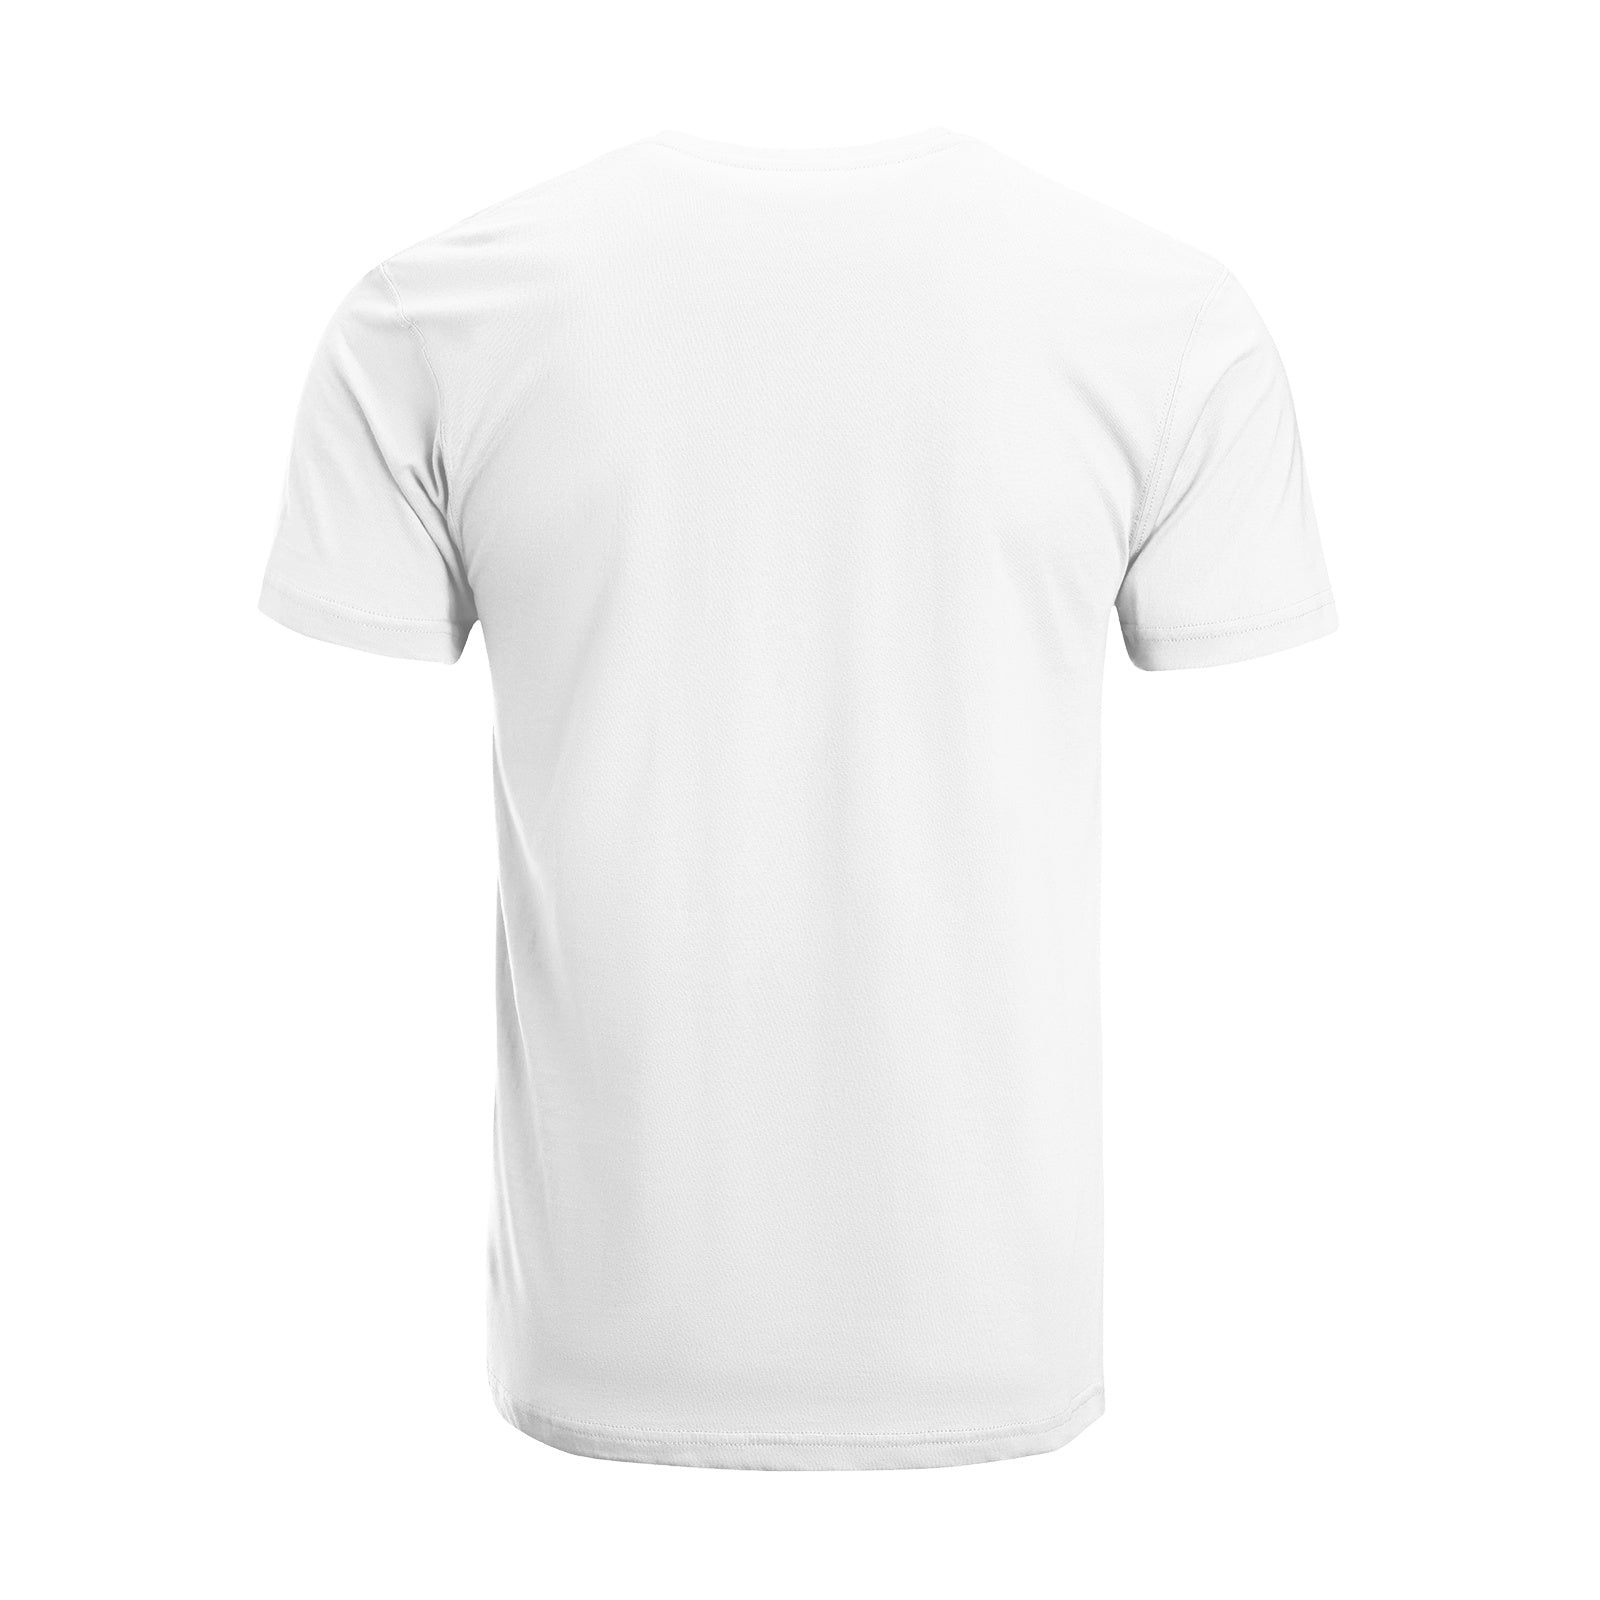 Unisex Short Sleeve Crew Neck Cotton Jersey T-Shirt Gym No. 11 - Tara-Outfits.com